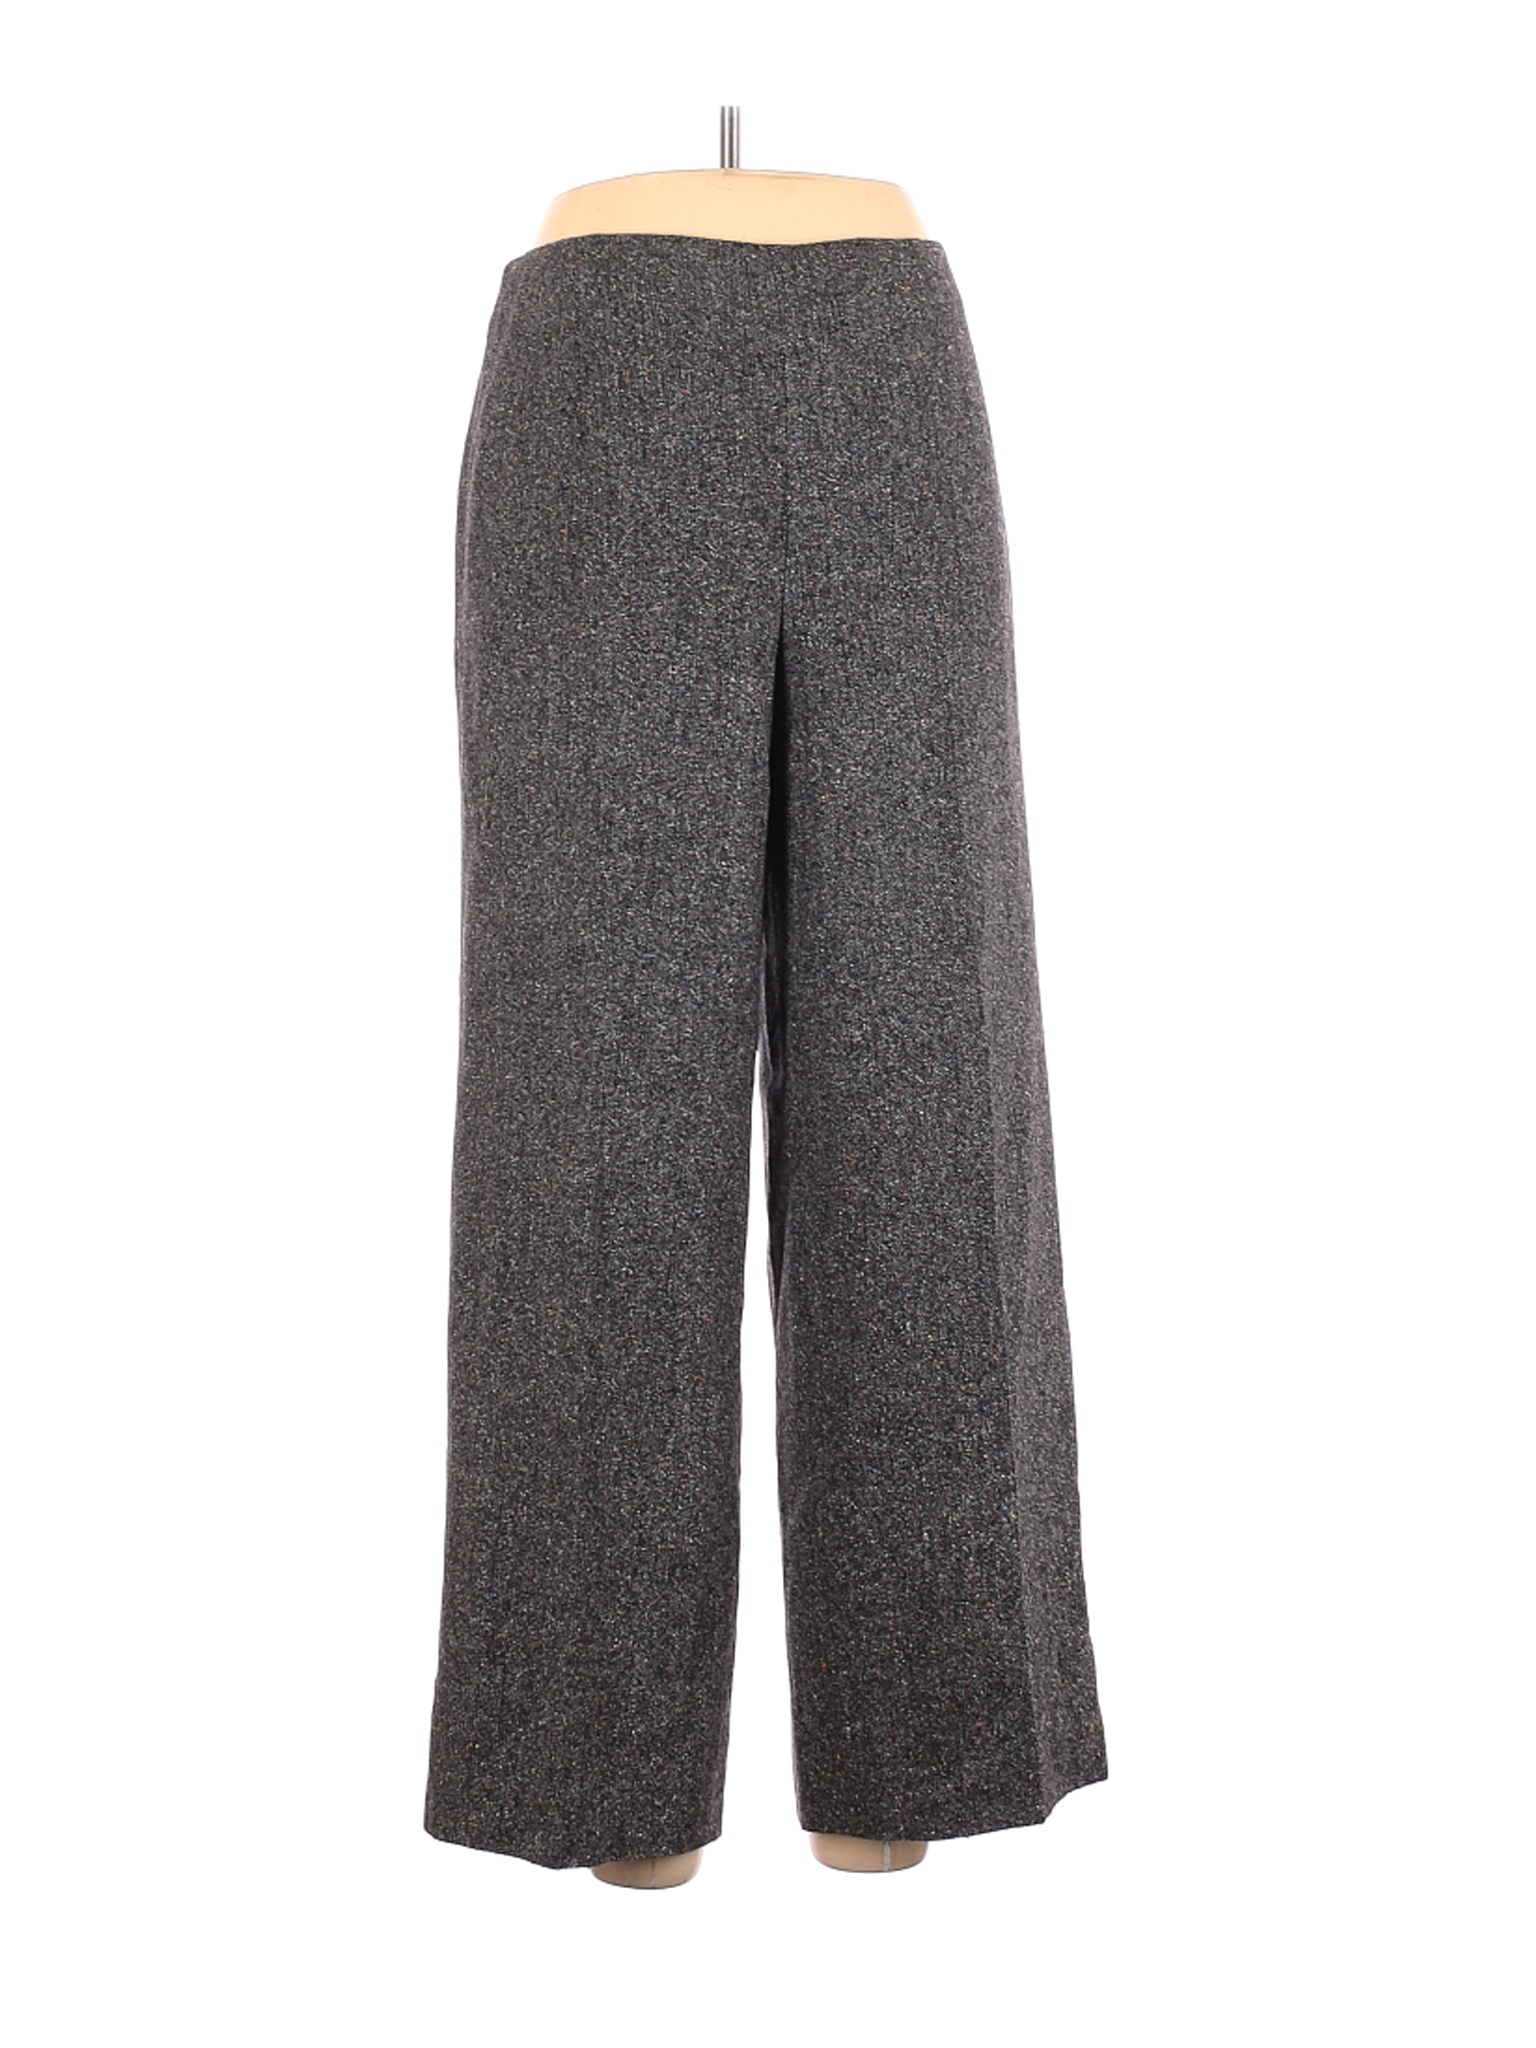 Talbots Women Gray Wool Pants 12 | eBay